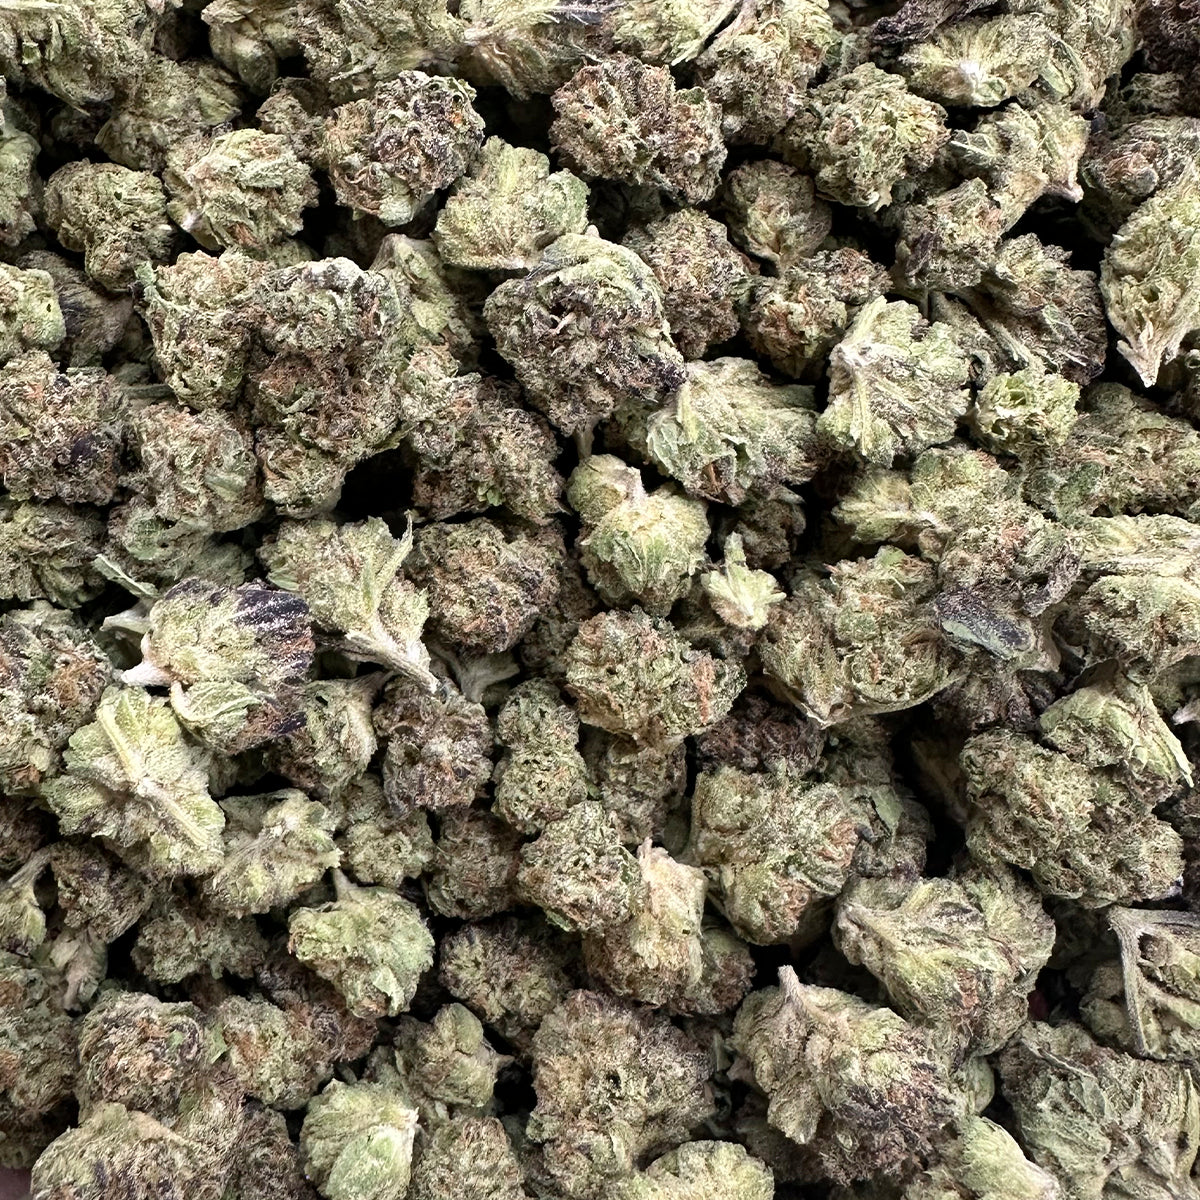 Premium THCa organically grown hemp flower, Cultivar name: Purple Push Pop with 21.2% Total Cannabinoids